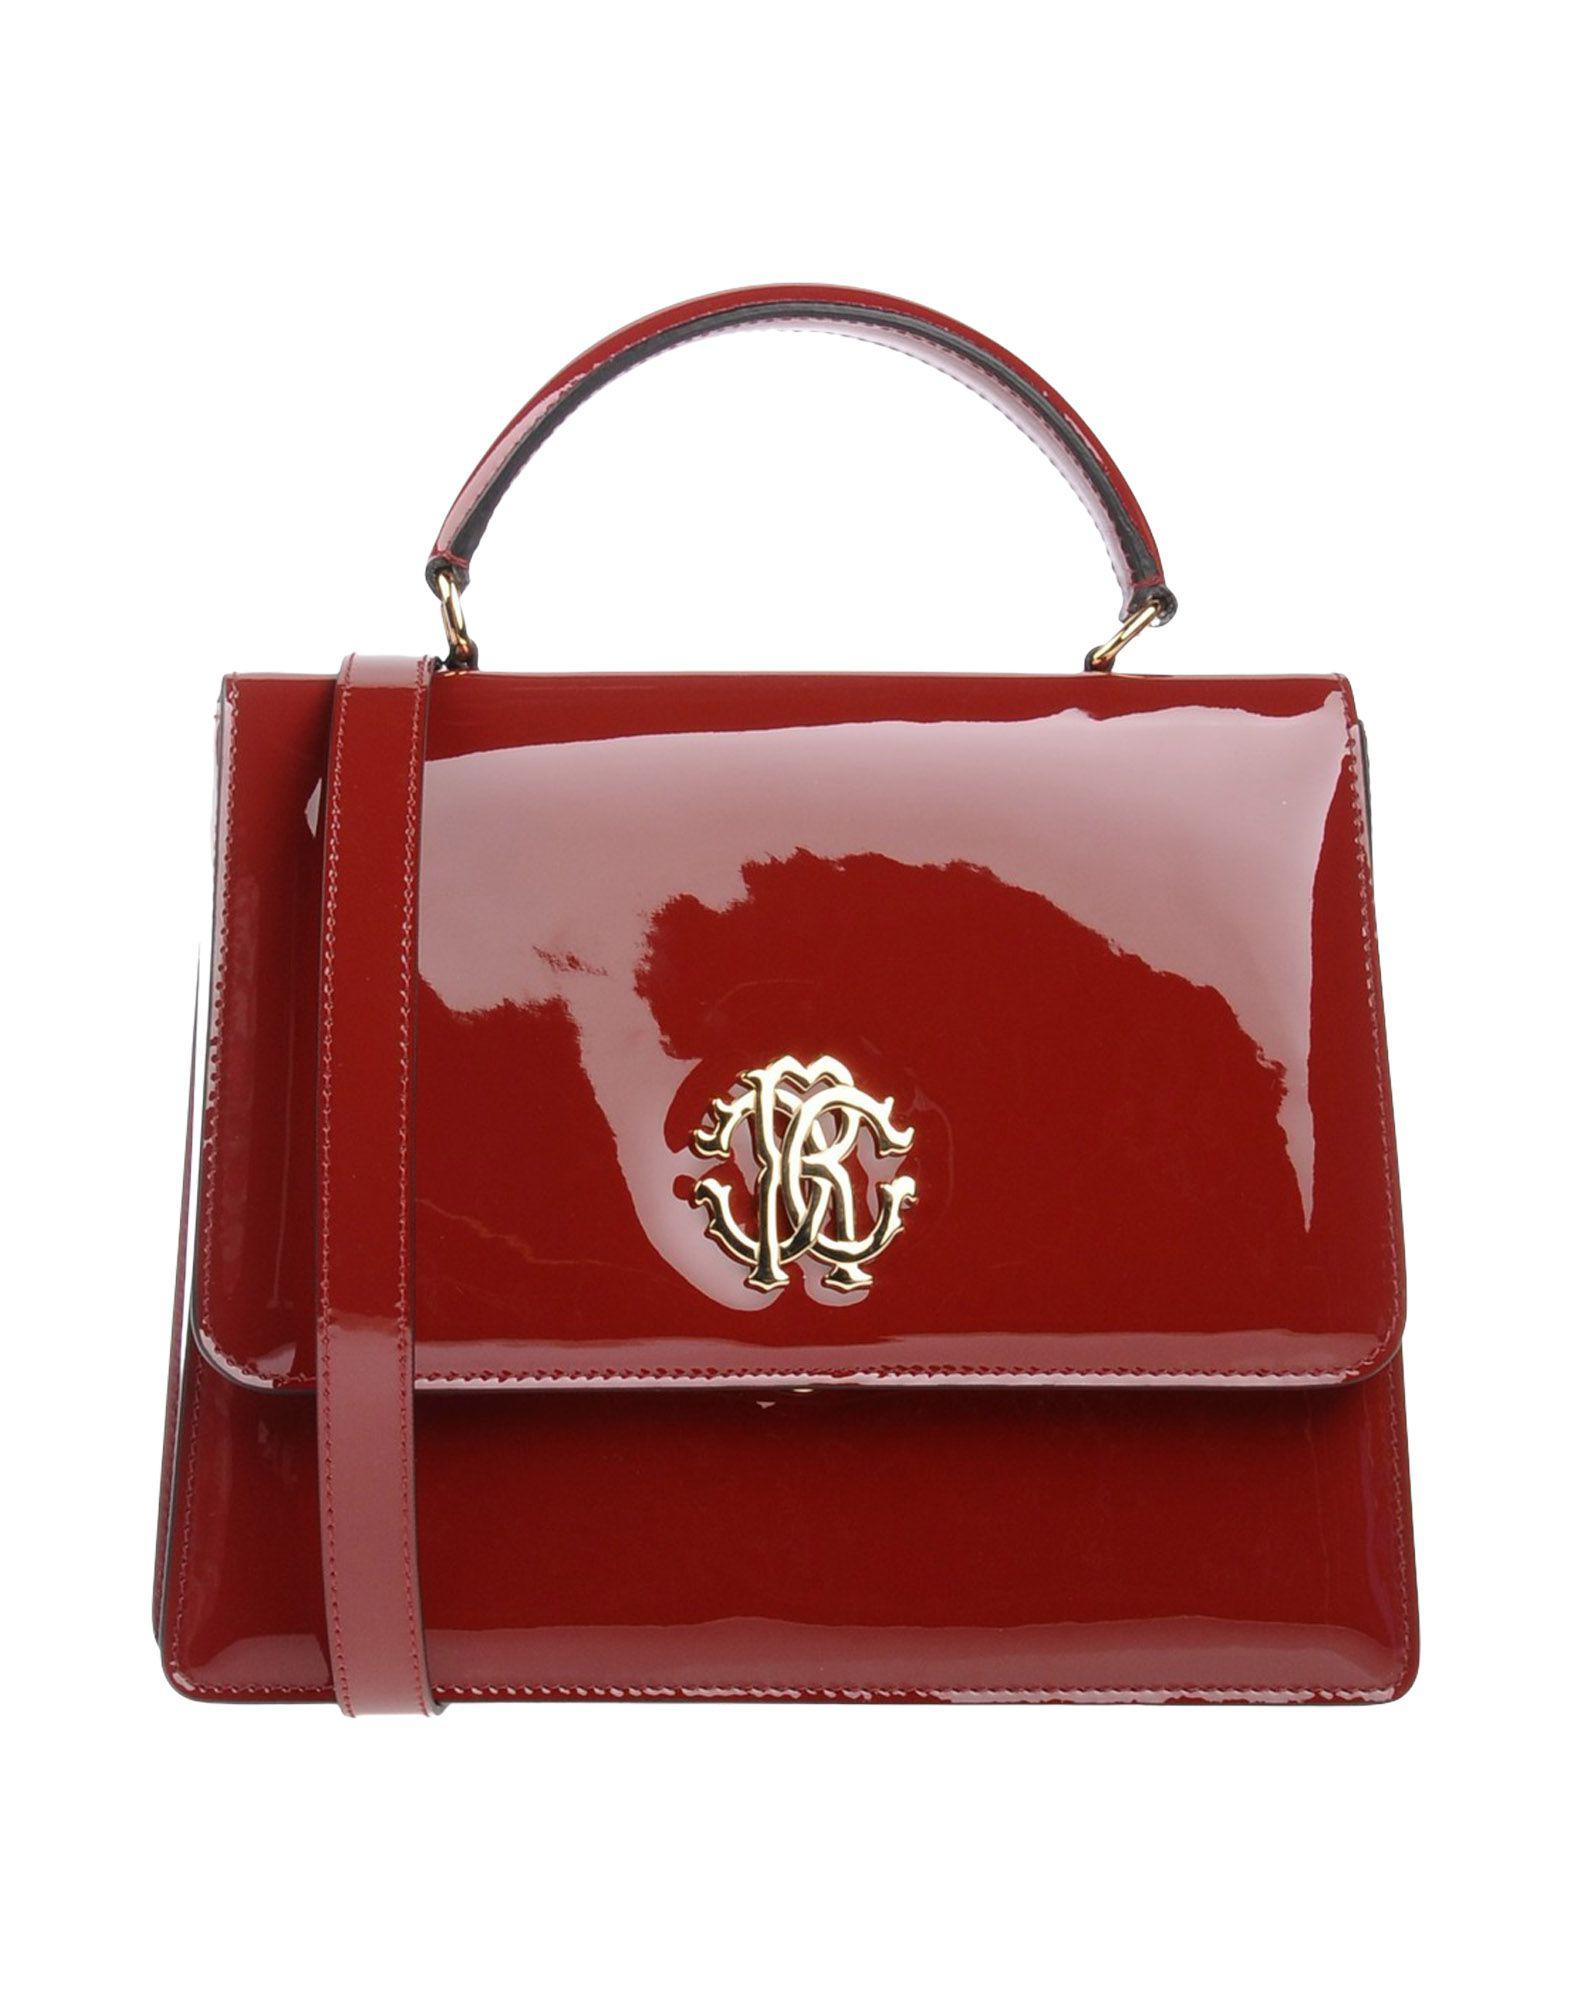 Roberto Cavalli Handbags in Red | Lyst Australia